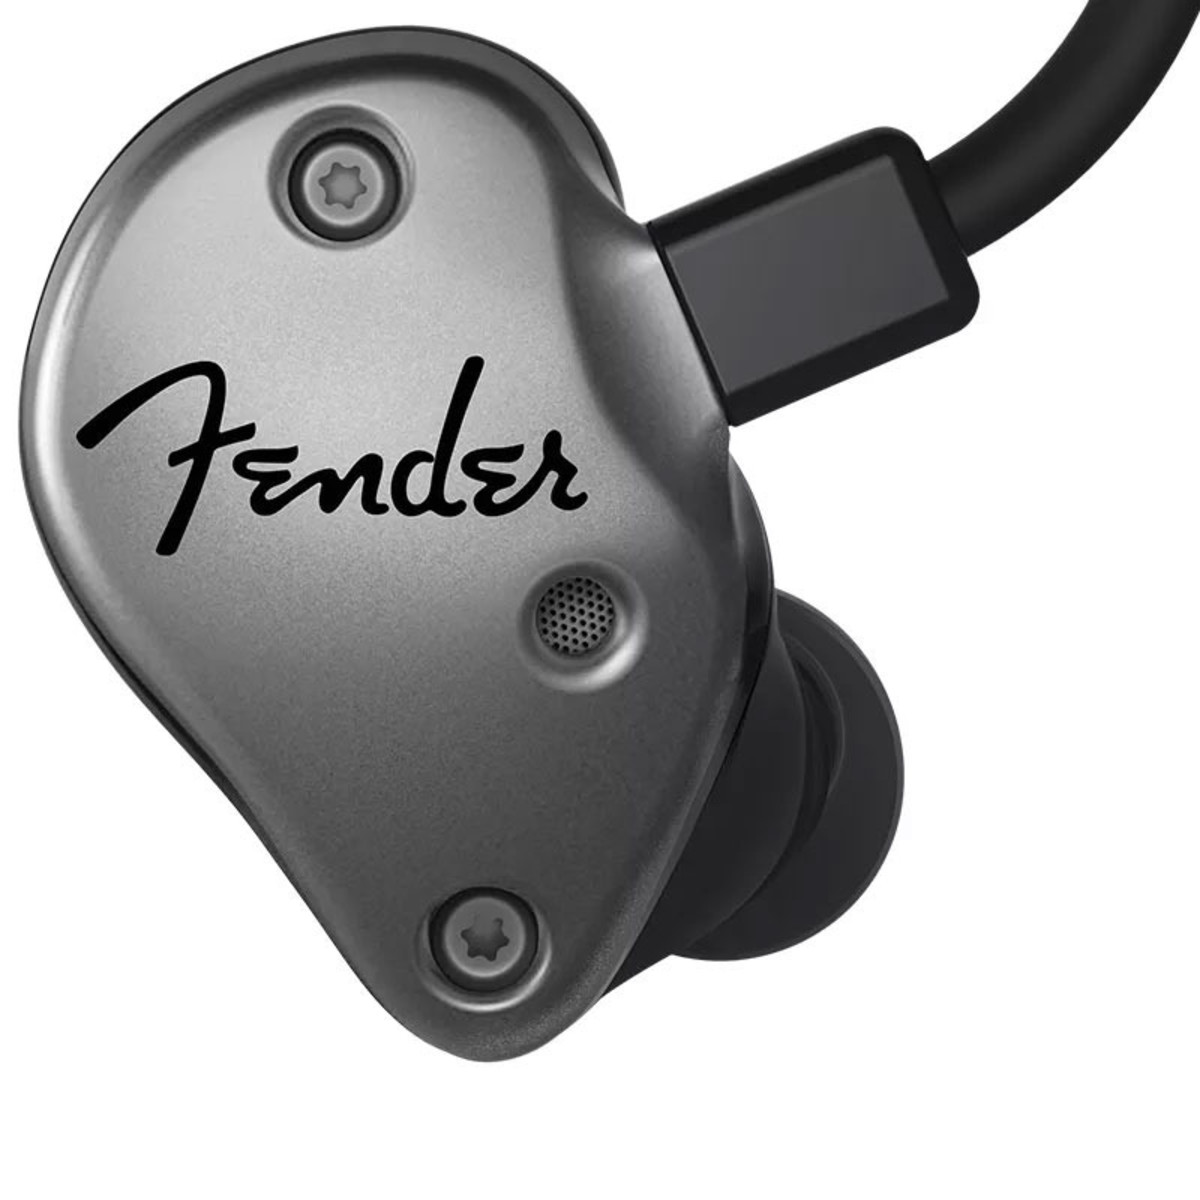 Fender FXA5 入耳式監聽耳機 (銀)